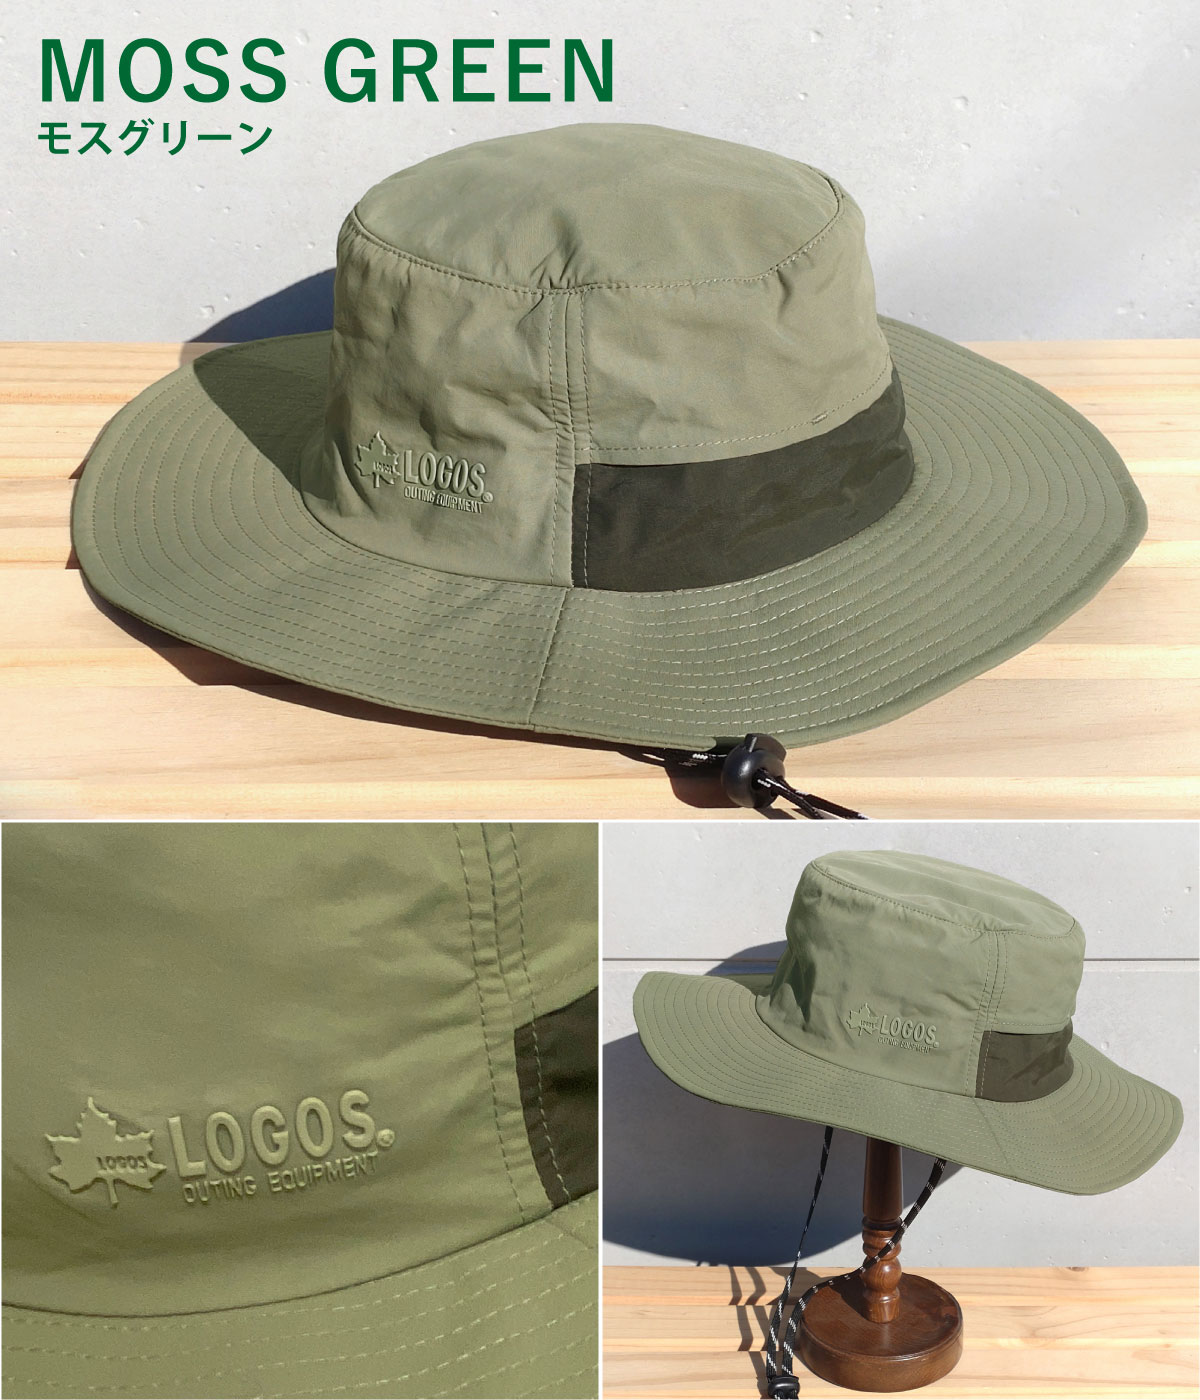 LOGOS 帽子 サファリハット 超軽量 メンズ レディース 58cm 通気性 ヒモつき hat-1...